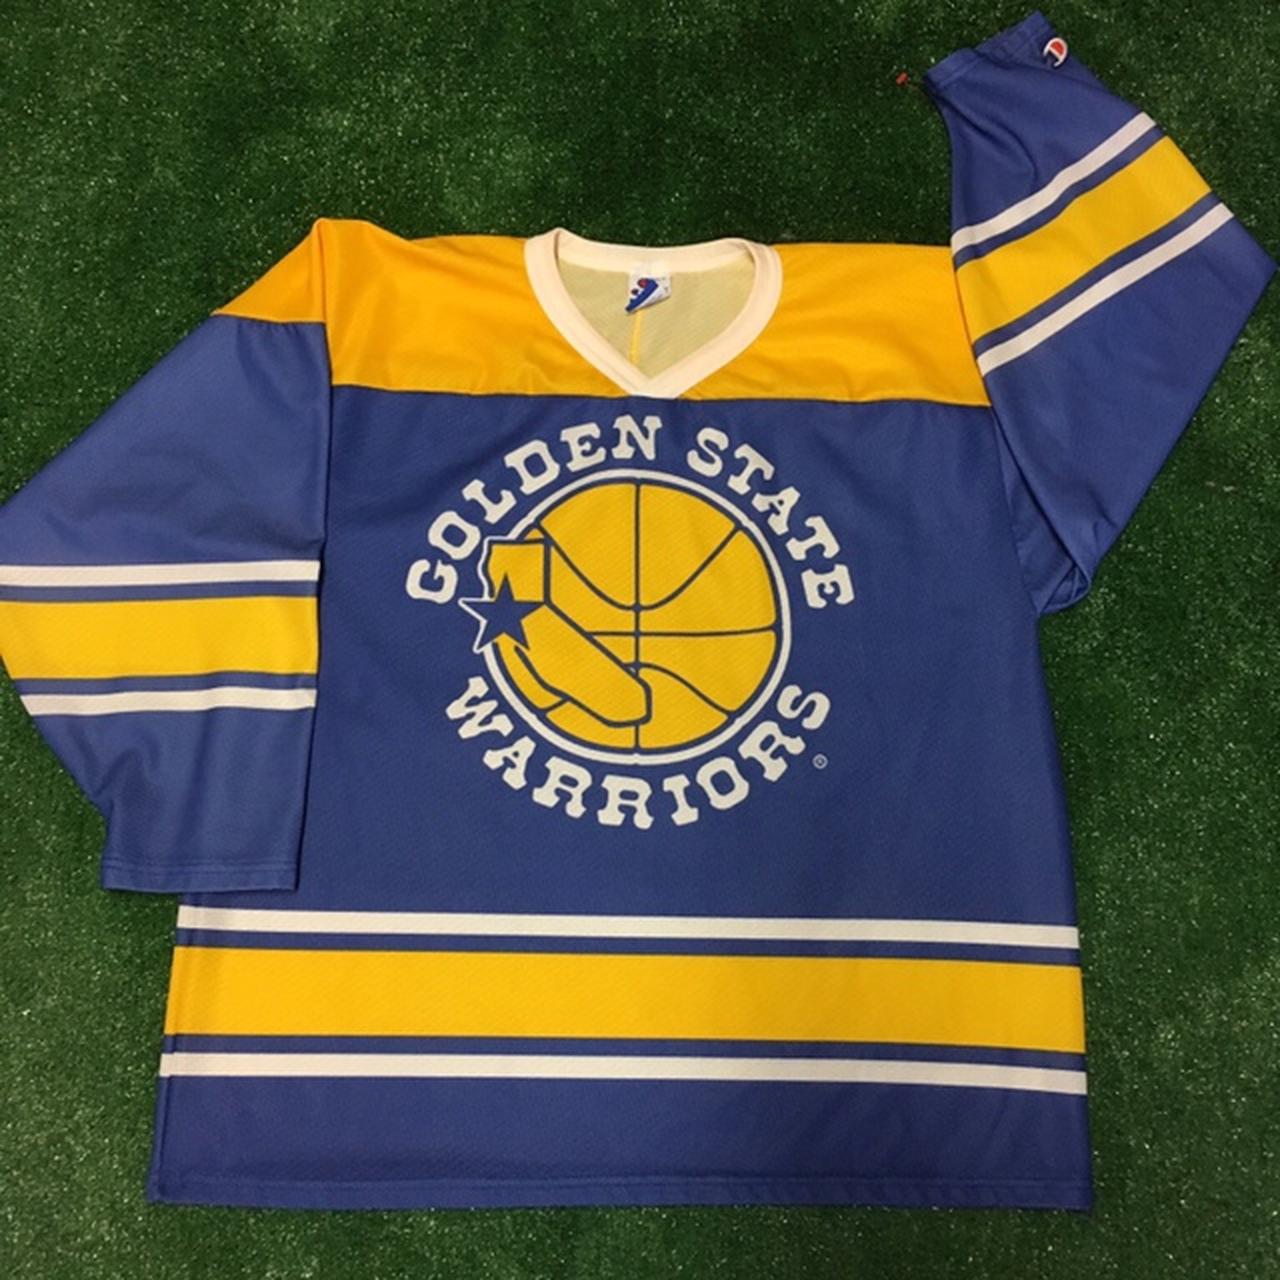 90s Golden State Warriors Champion Hockey Jersey